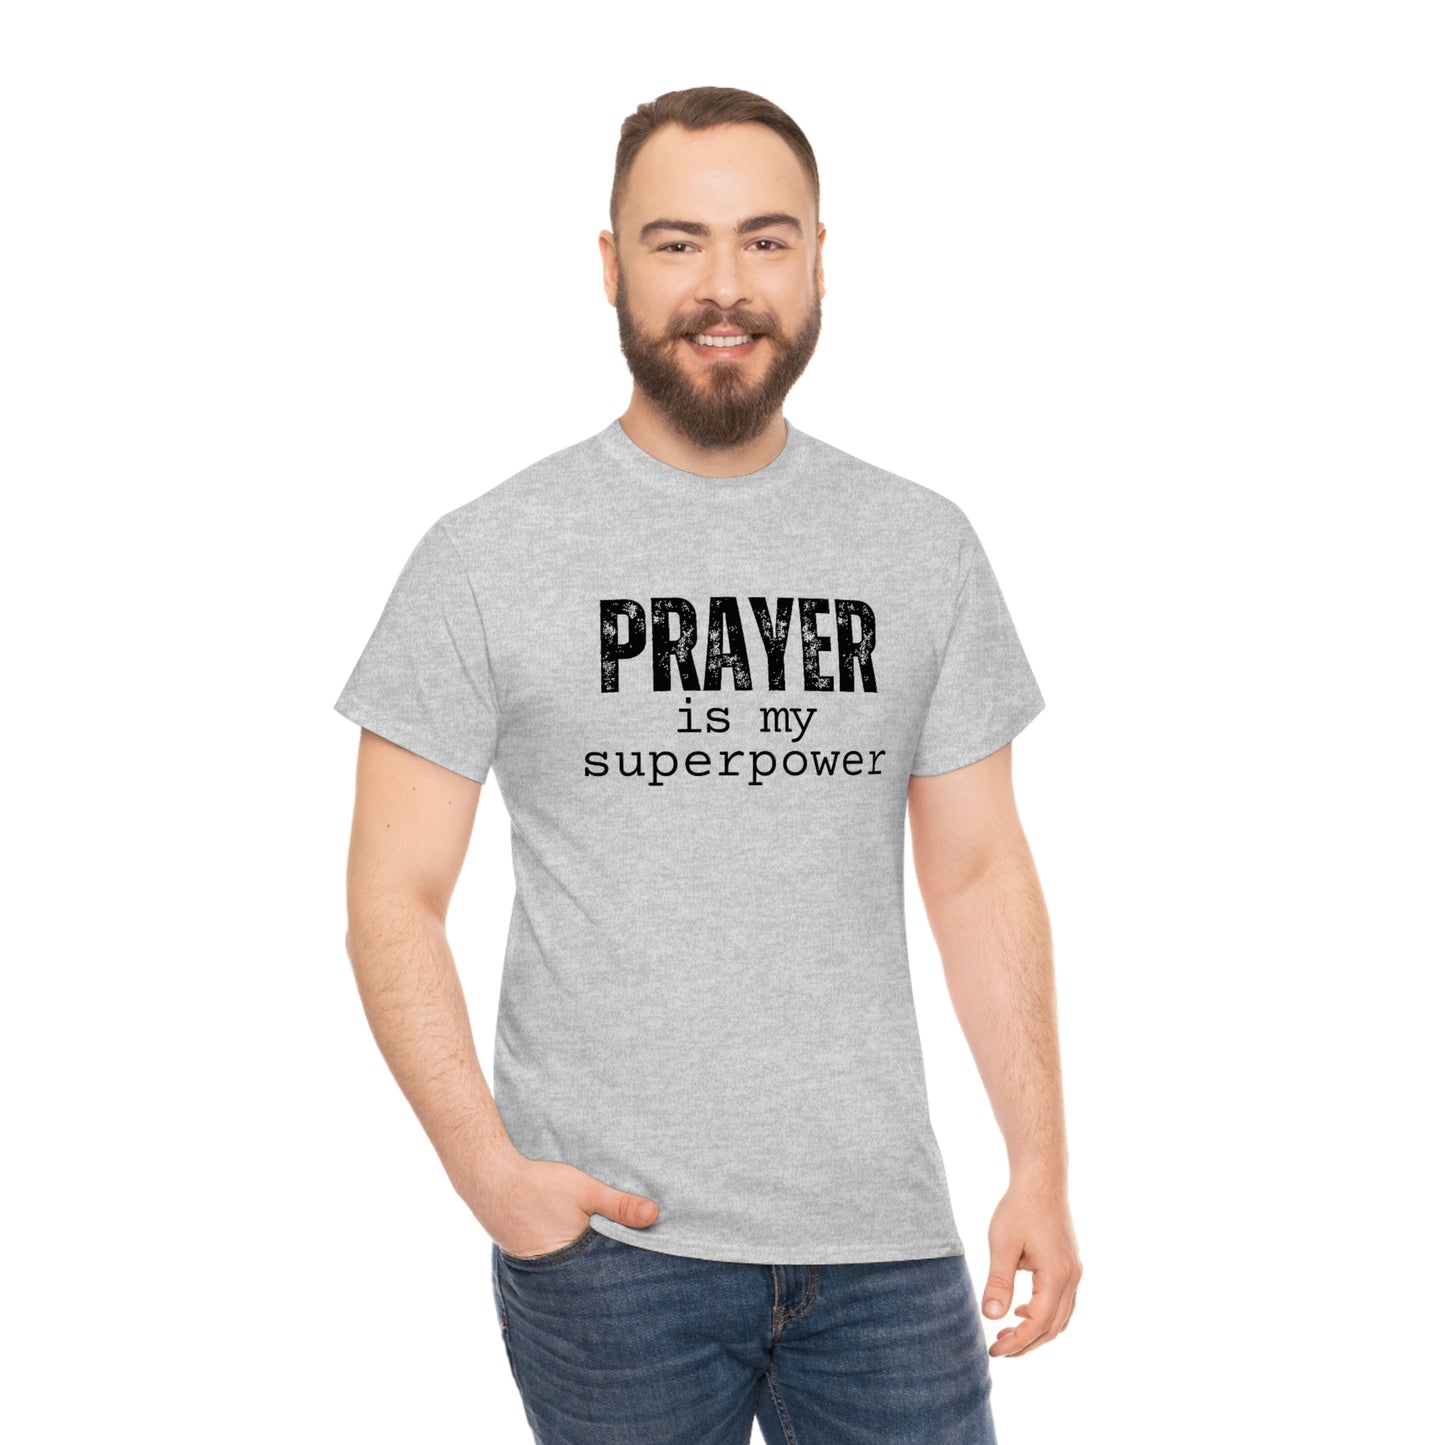 Prayer is My Superpower, Unisex T-Shirt, Faith Based, Christian Streetwear